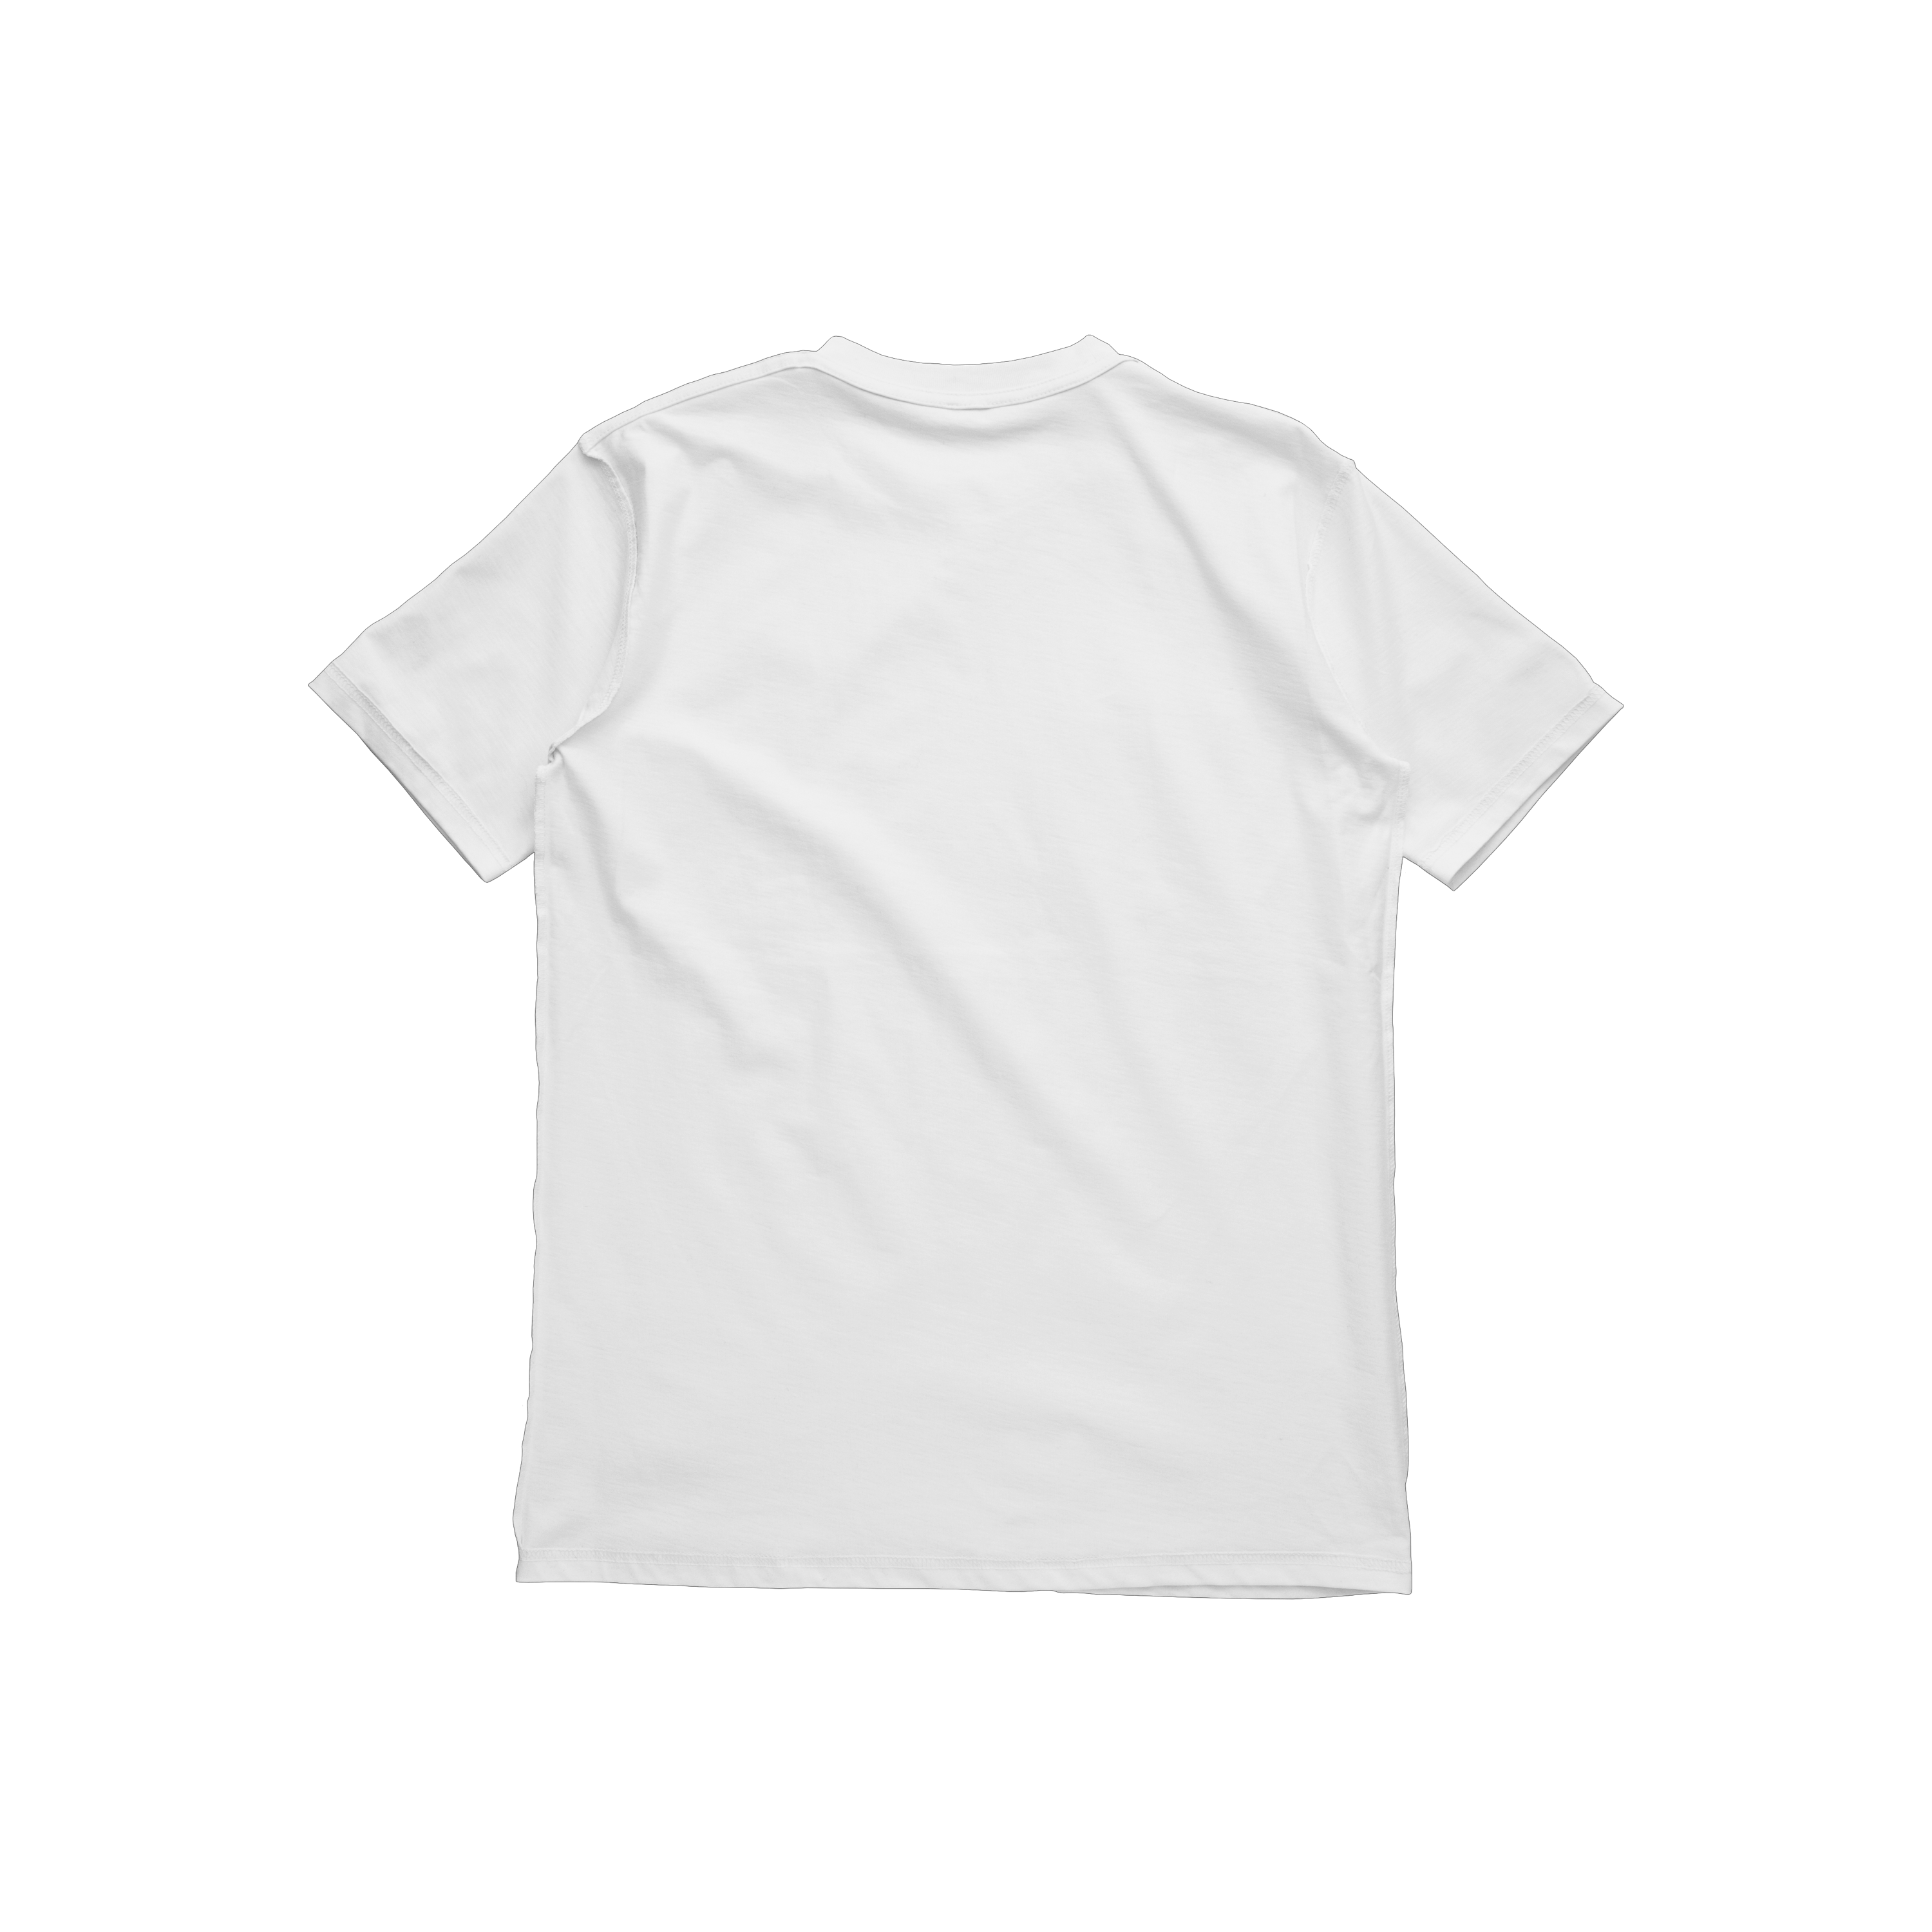 Reverse Weave T-Shirt Mockup